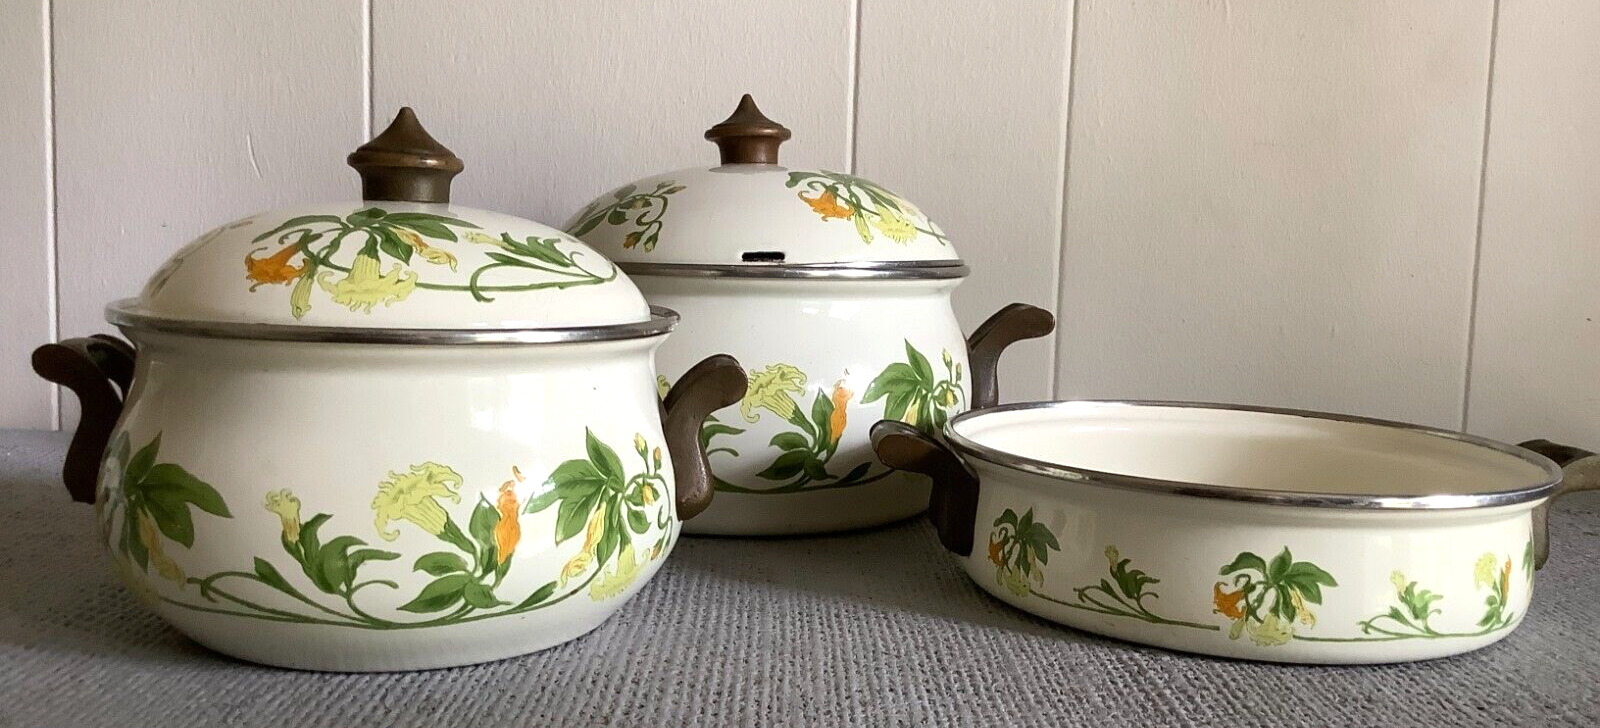 Vintage ASTA German Floral Enamelware Cookware Set With Brass Handles 5 Pieces